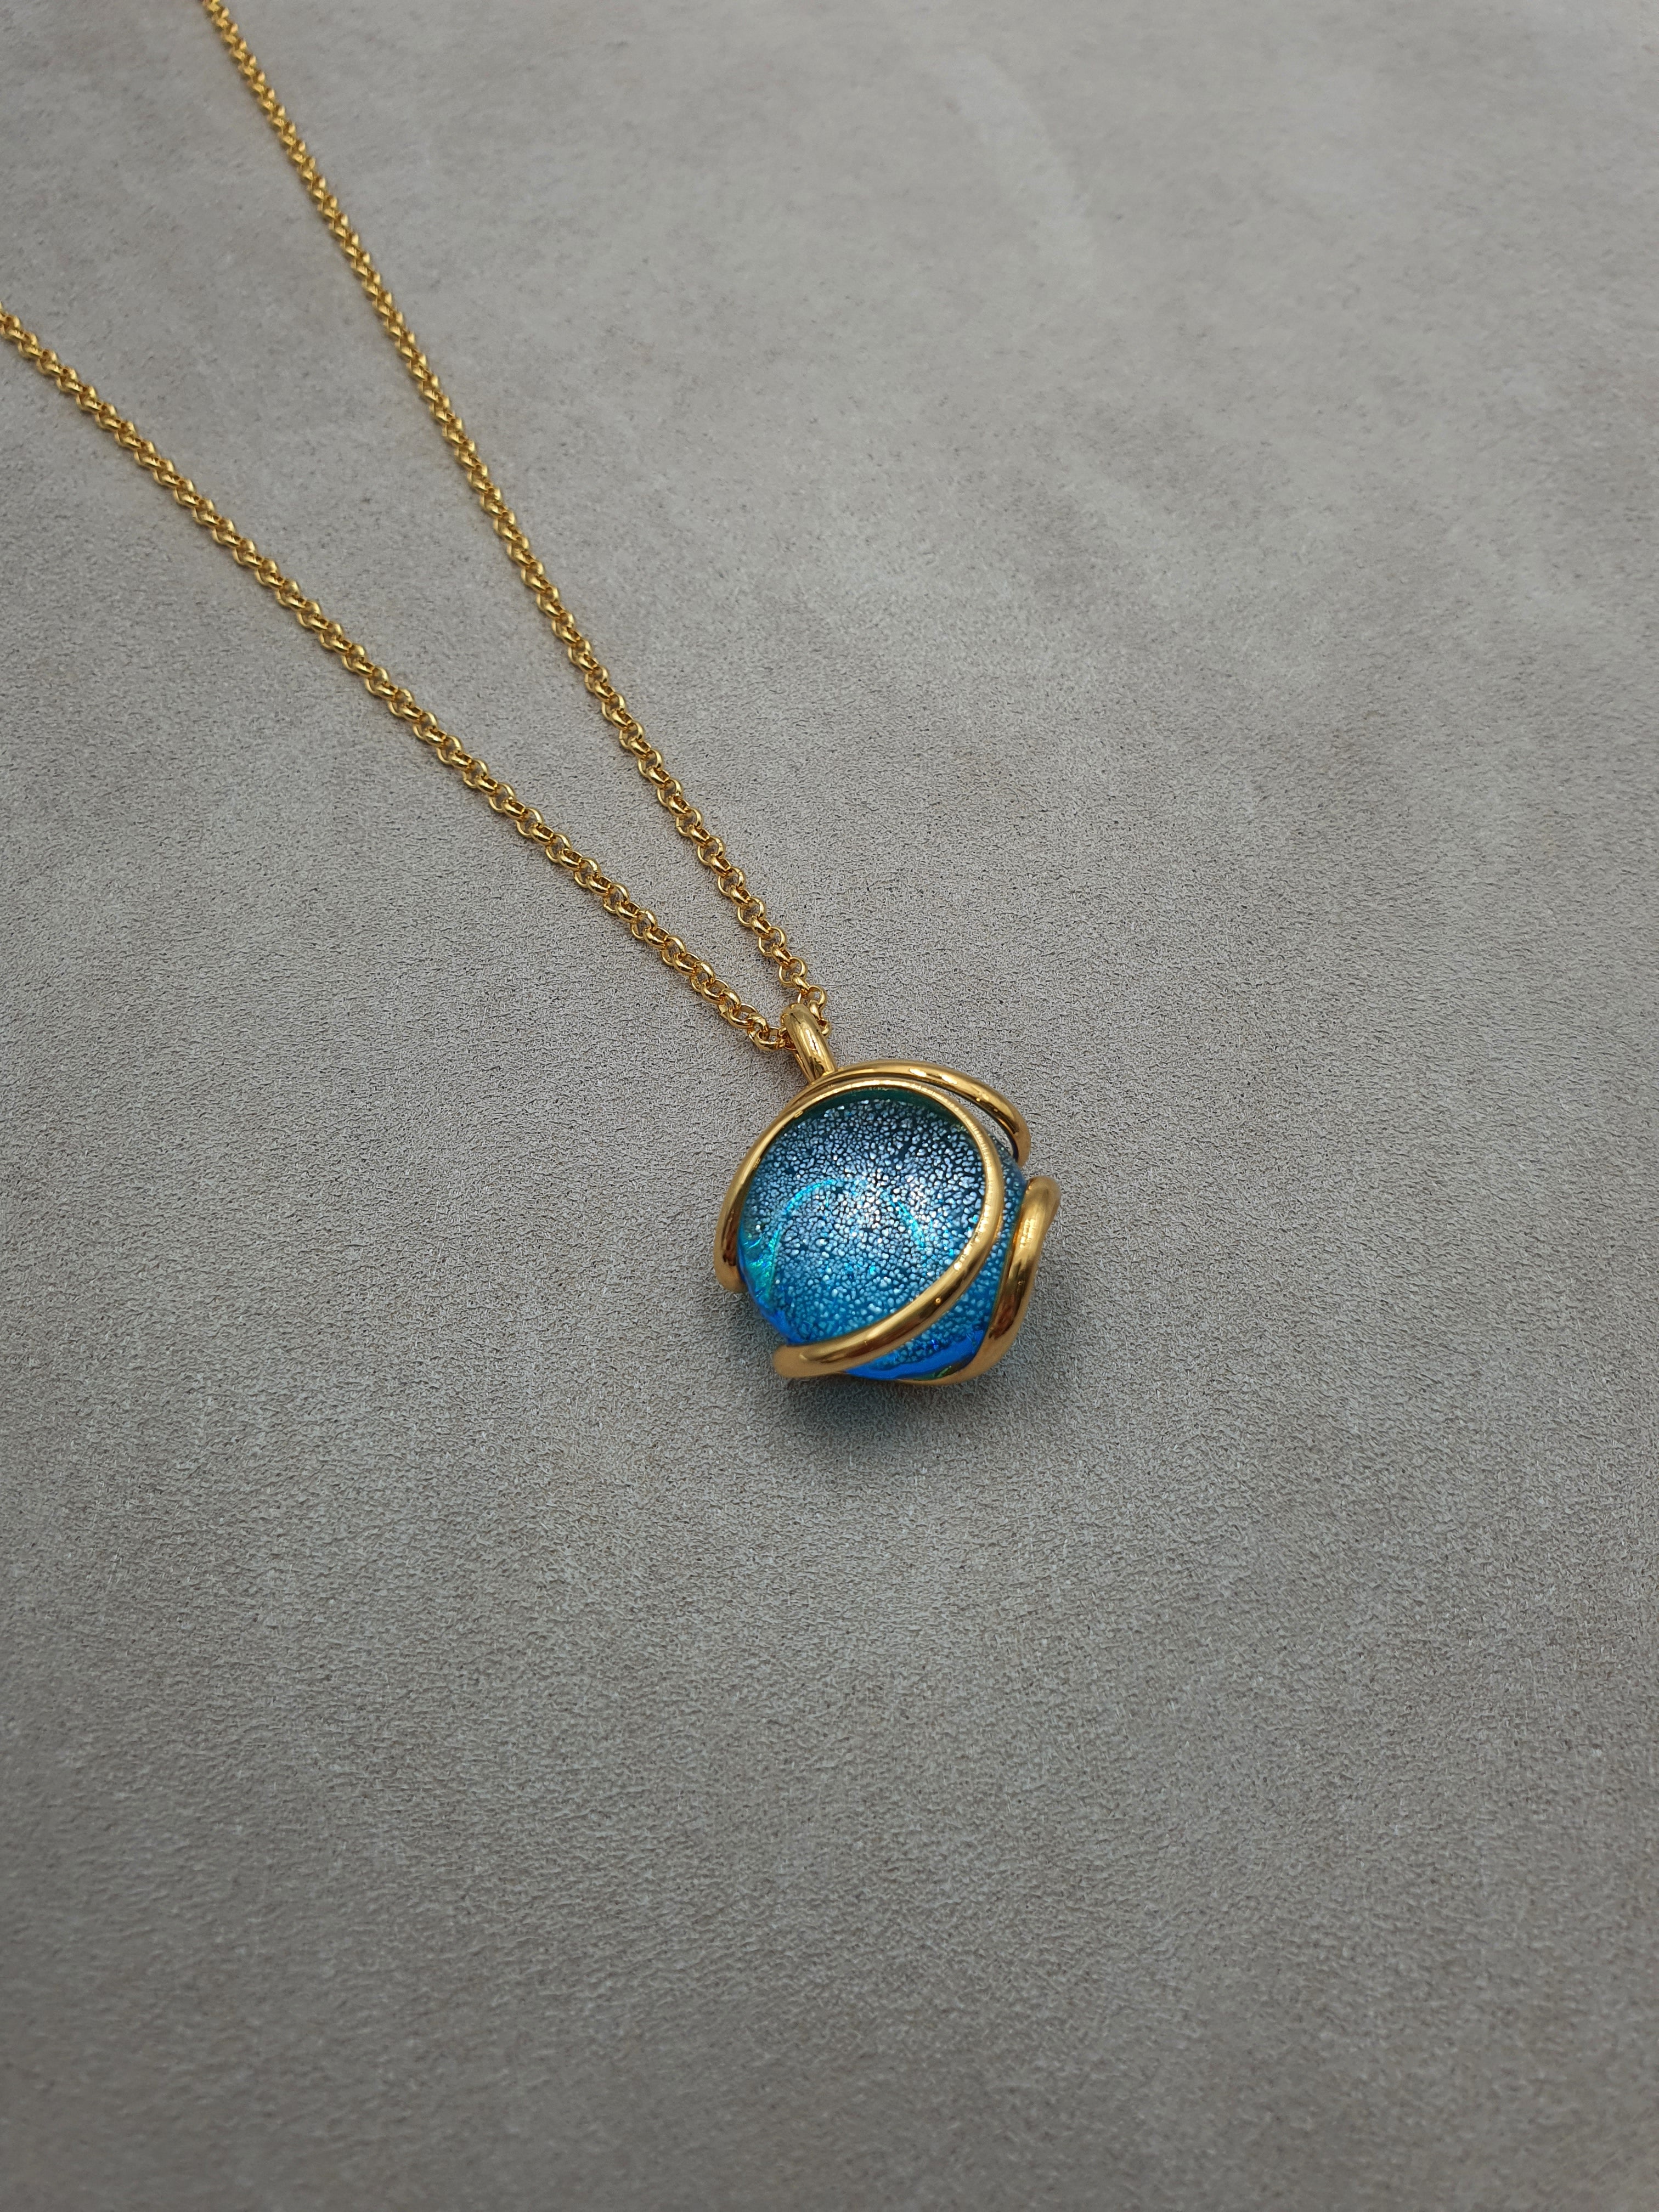 Nautilus - Turquoise - Gold - Necklace - Andrea Marazzini